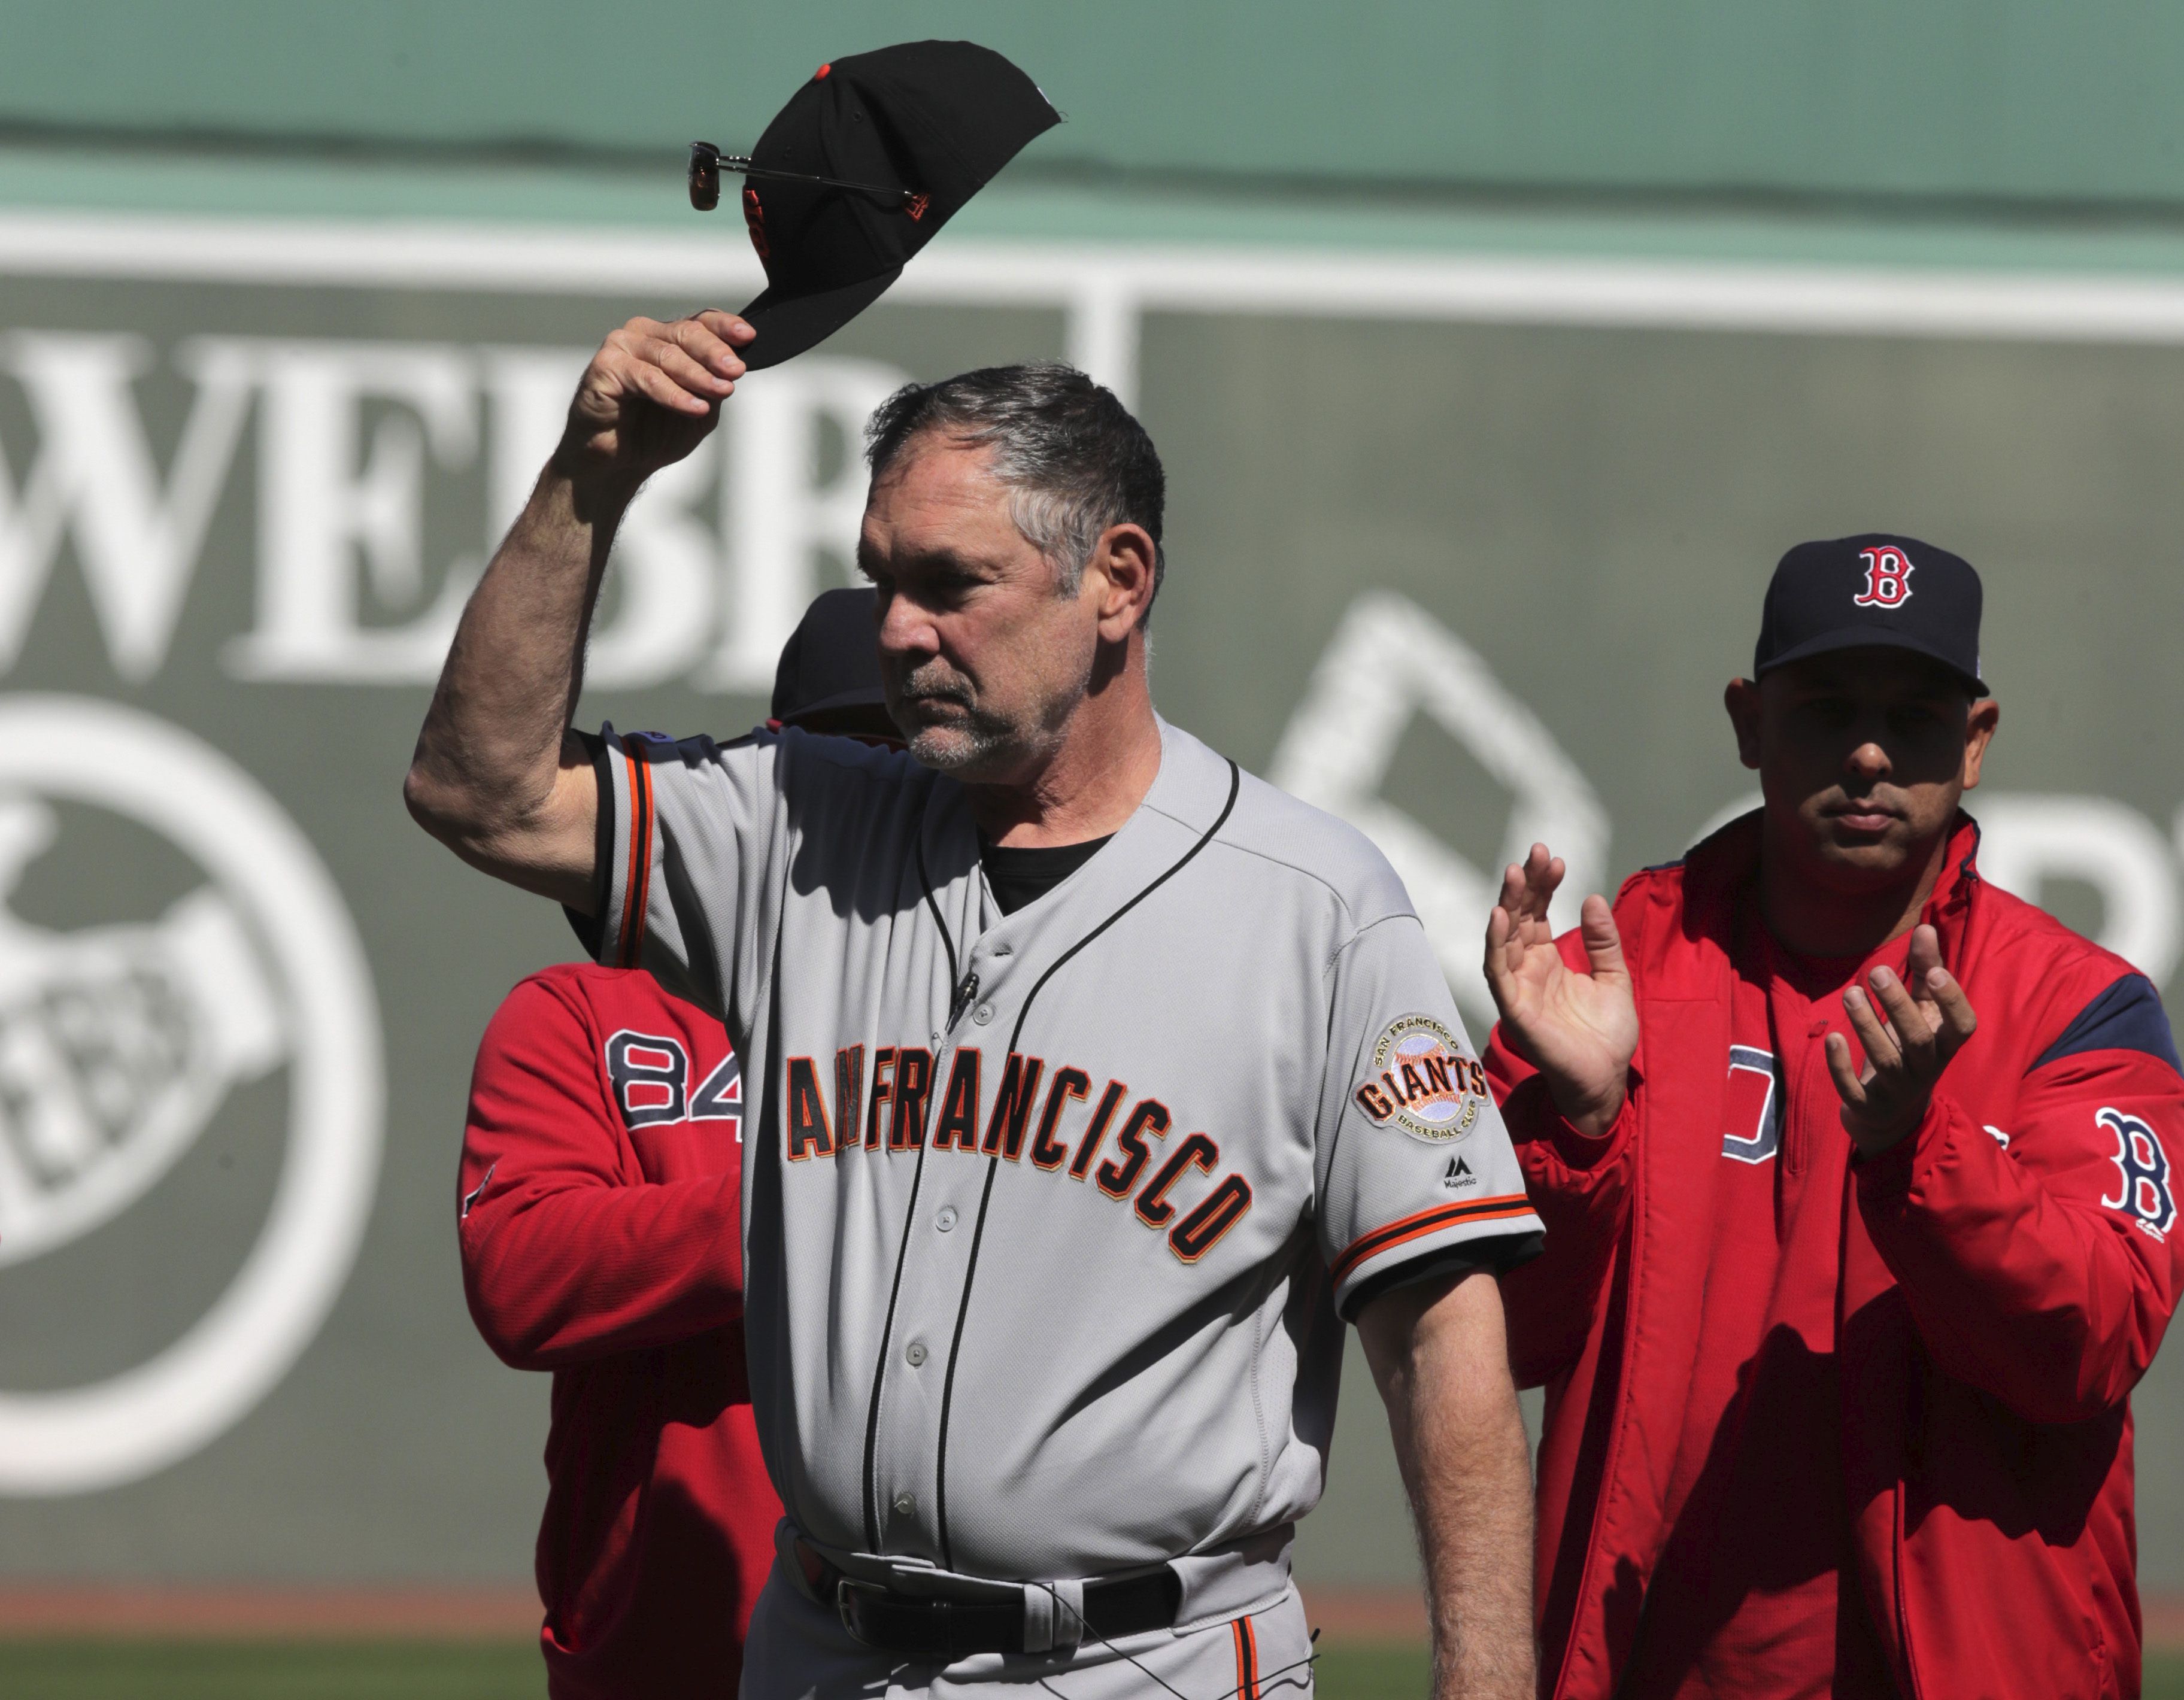 Baseball will miss Giants manager Bruce Bochy - The Boston Globe